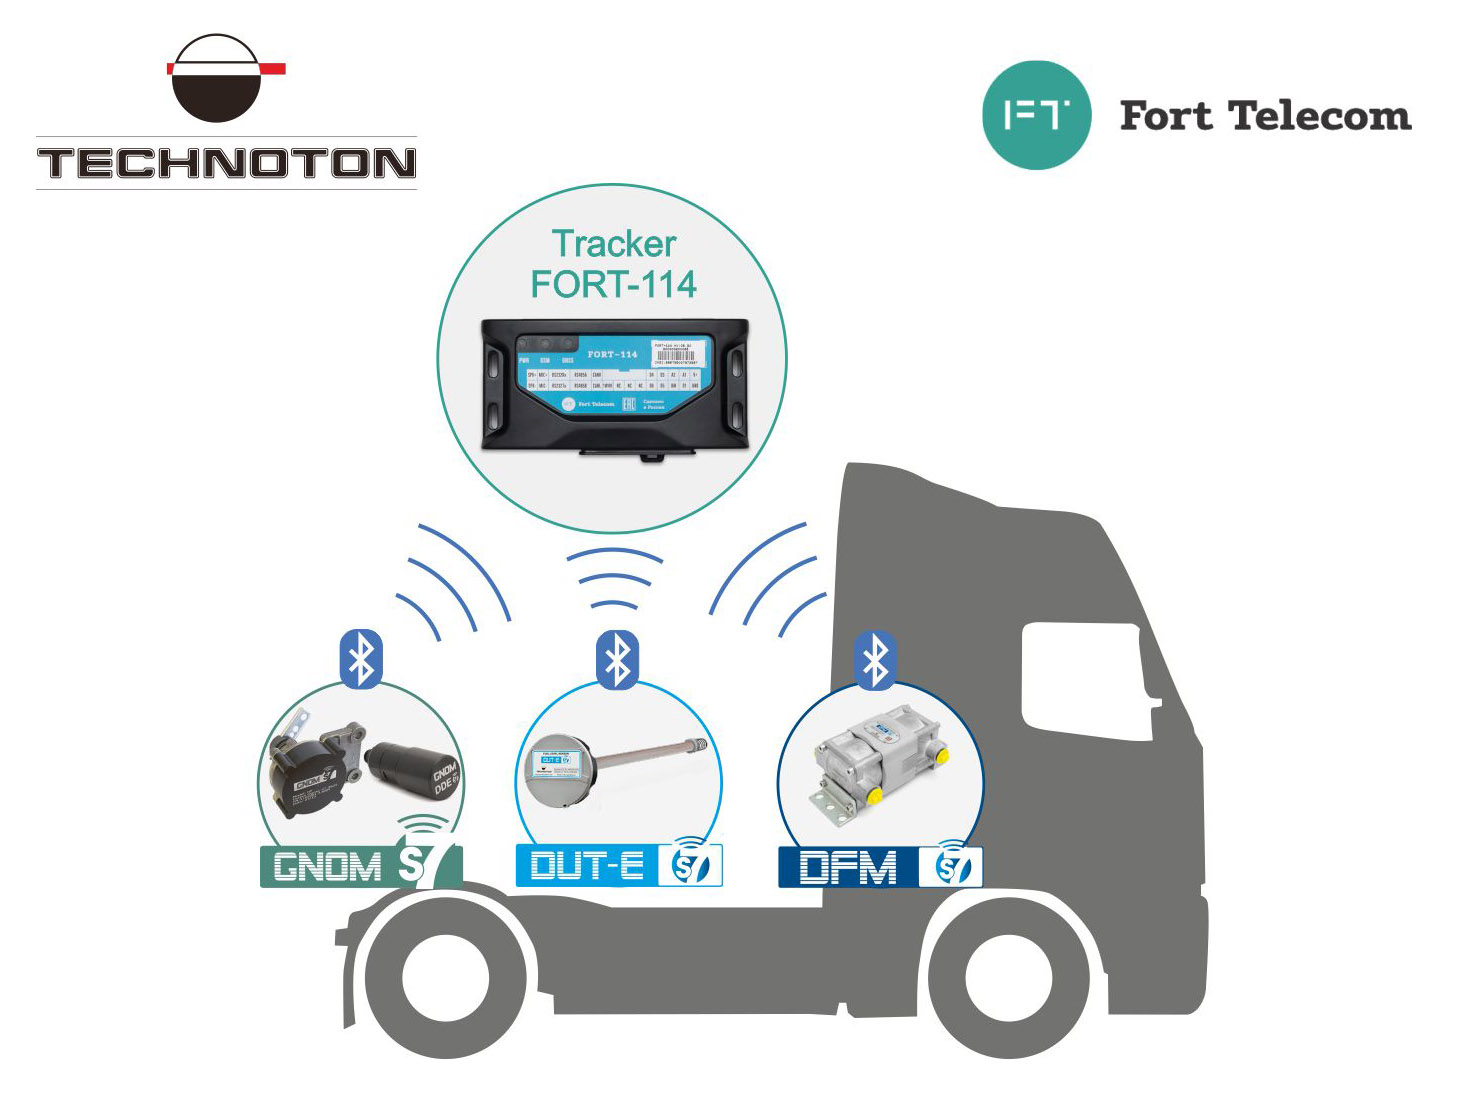  Truck monitoring using Technoton BLE sensors and Fort Telecom tracking device